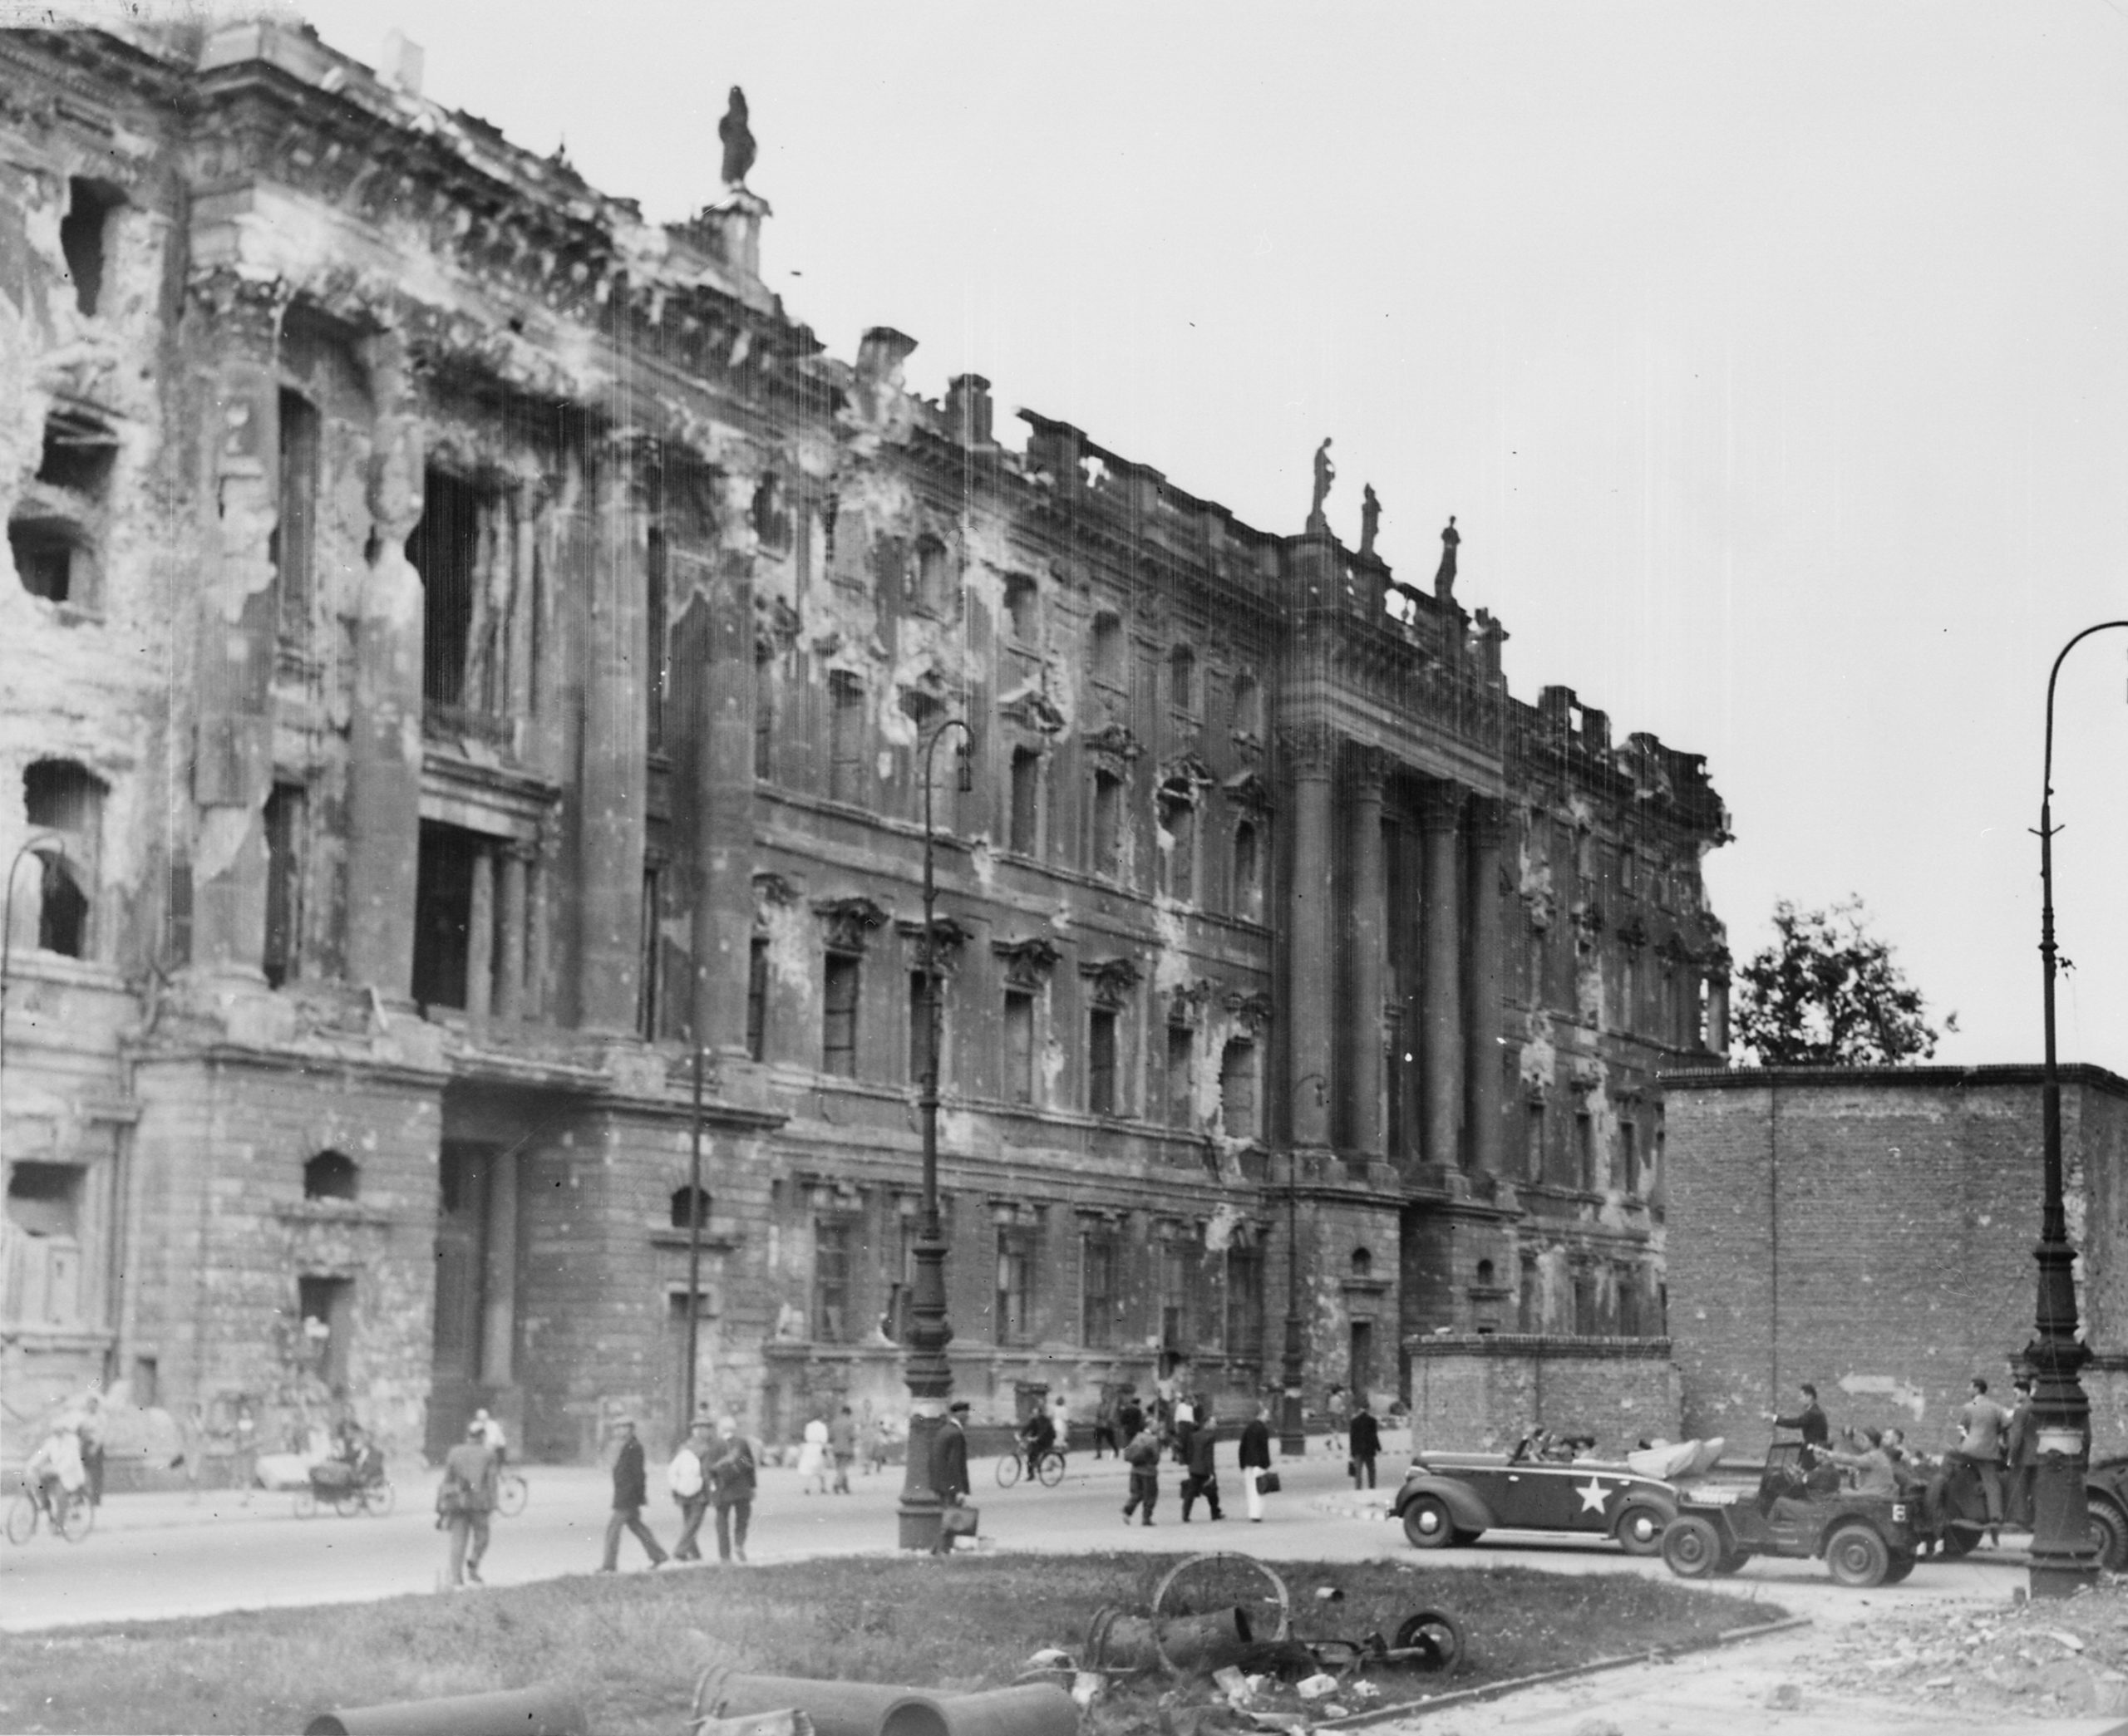 Berliner Schloss: Ansicht des beschädigten Südflügels am Schlossplatz, 1945. Foto: Gemeinfrei
